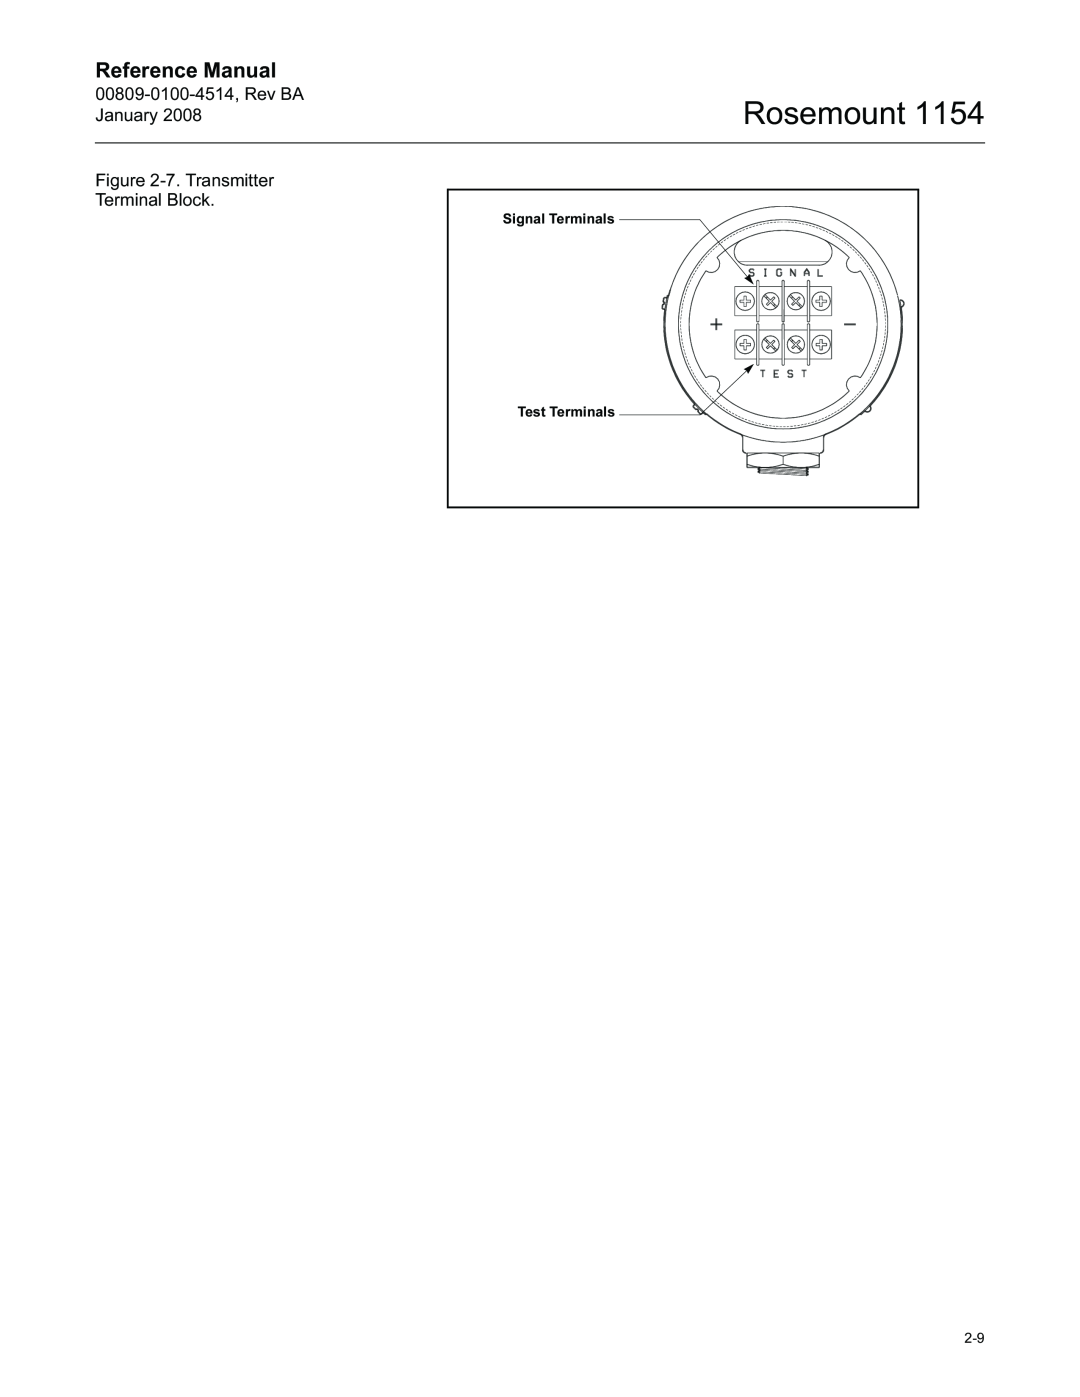 Emerson 1154, 00809-0100-4514 manual Rosemount, Reference Manual, Signal Terminals, Test Terminals 